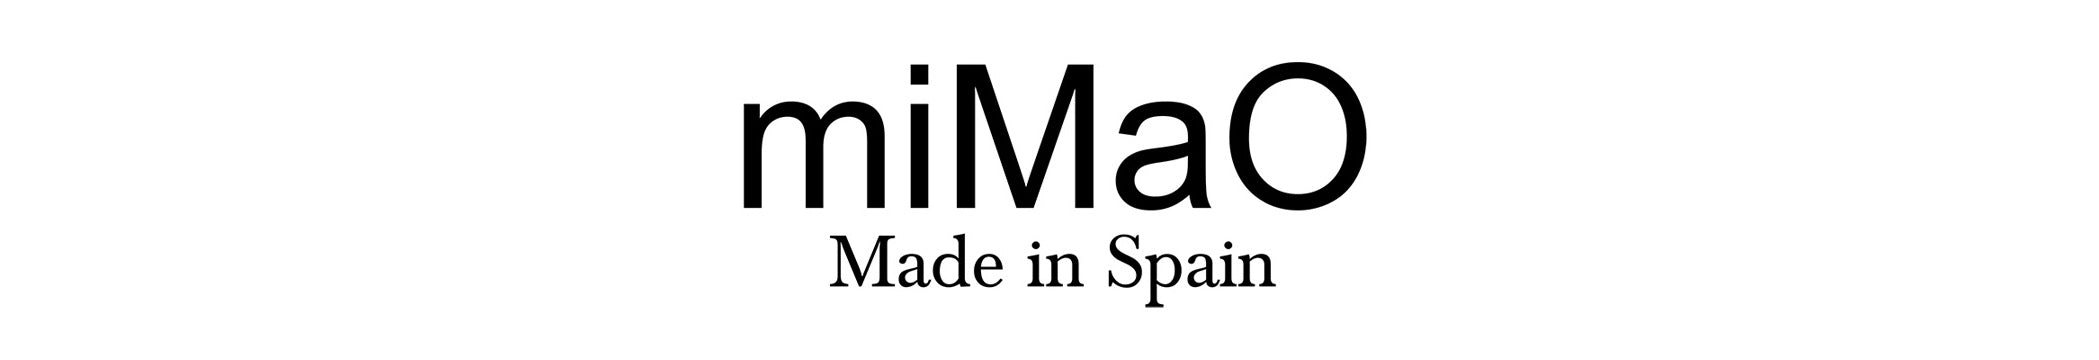 miMaO 100% leather shoes in Spain | NEW miMaO USA